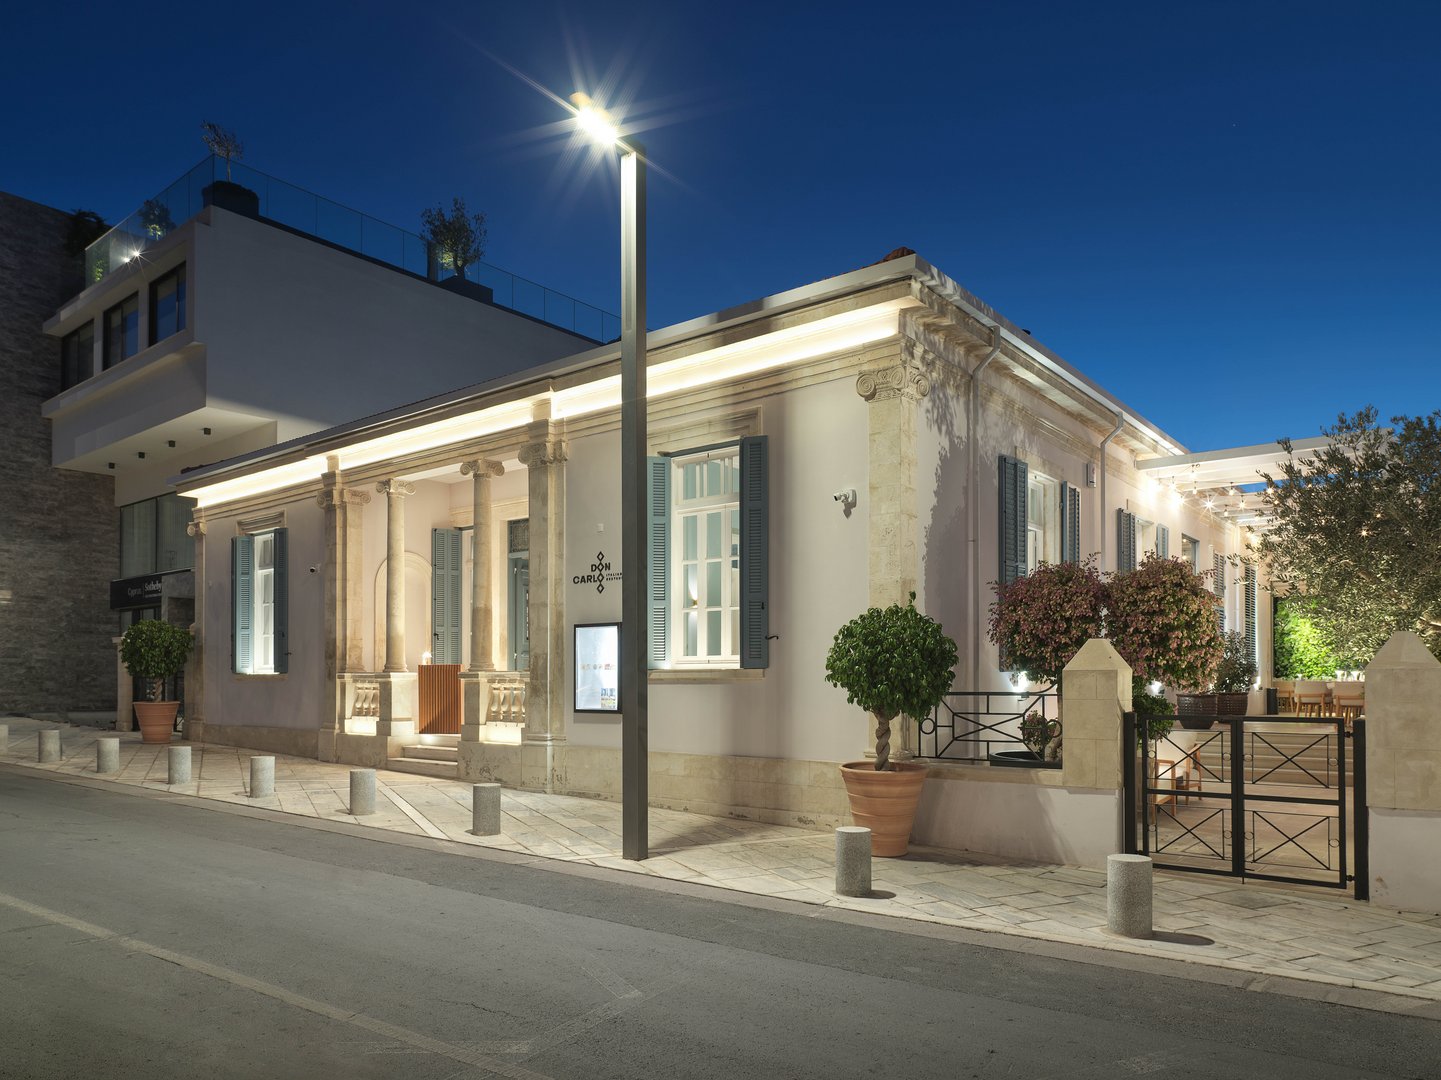 image Restaurant review: Don Carlo Italian, Paphos